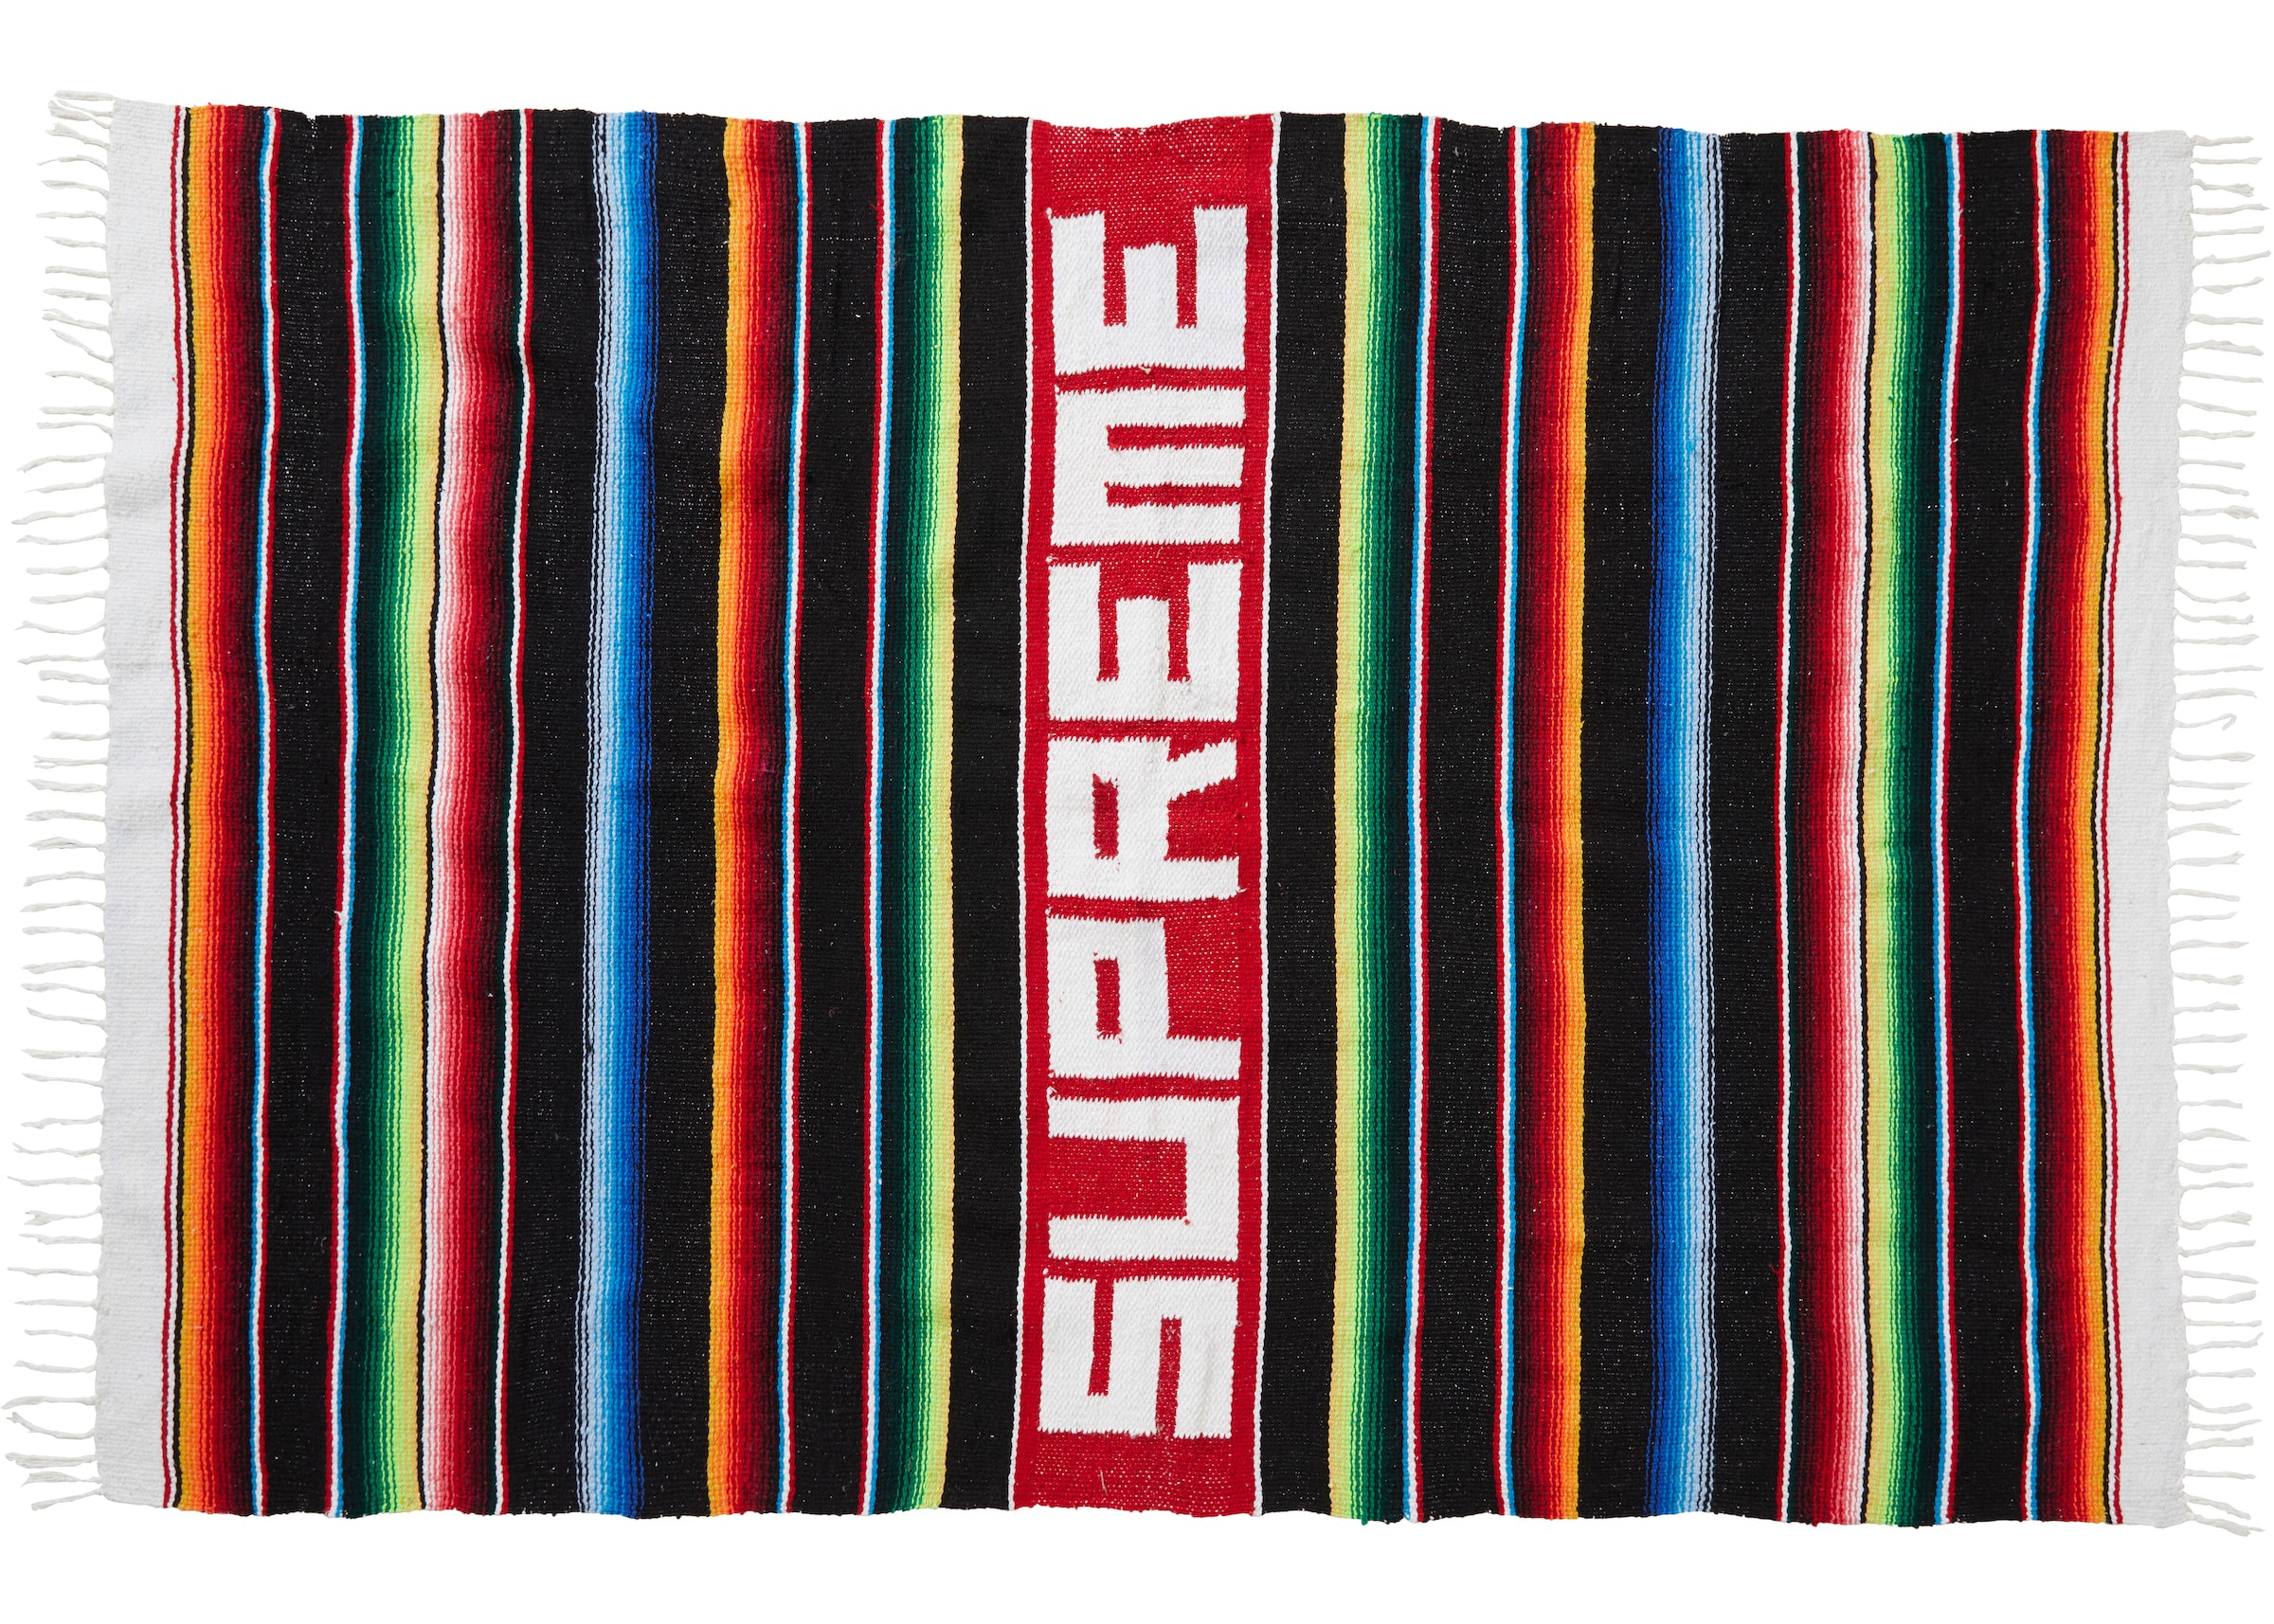 Inside plug - For sale Supreme serape blanket Brandnew Dm us to purchase